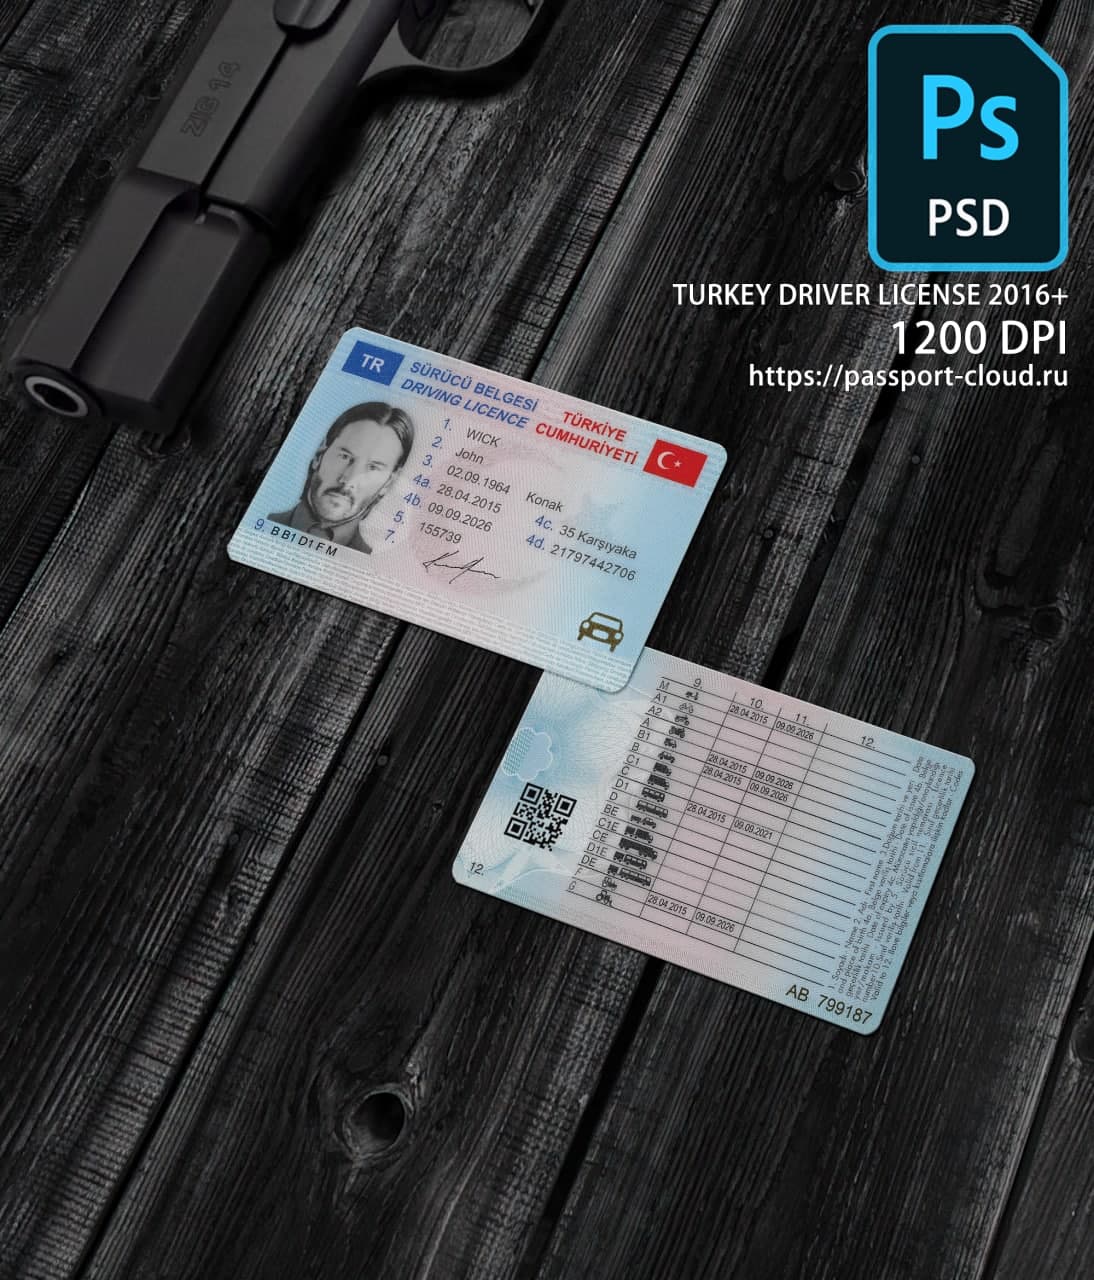 Turkey Driver License 2016+ PSD1